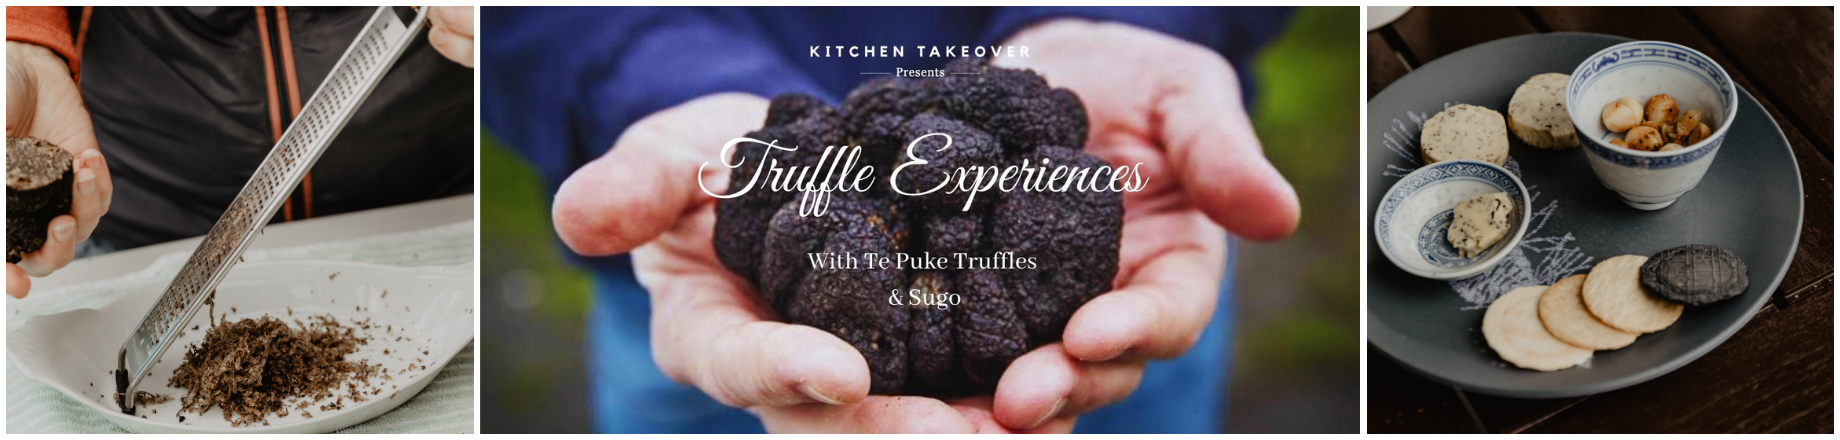 Kitchen Takeover Presents: Truffle Experiences